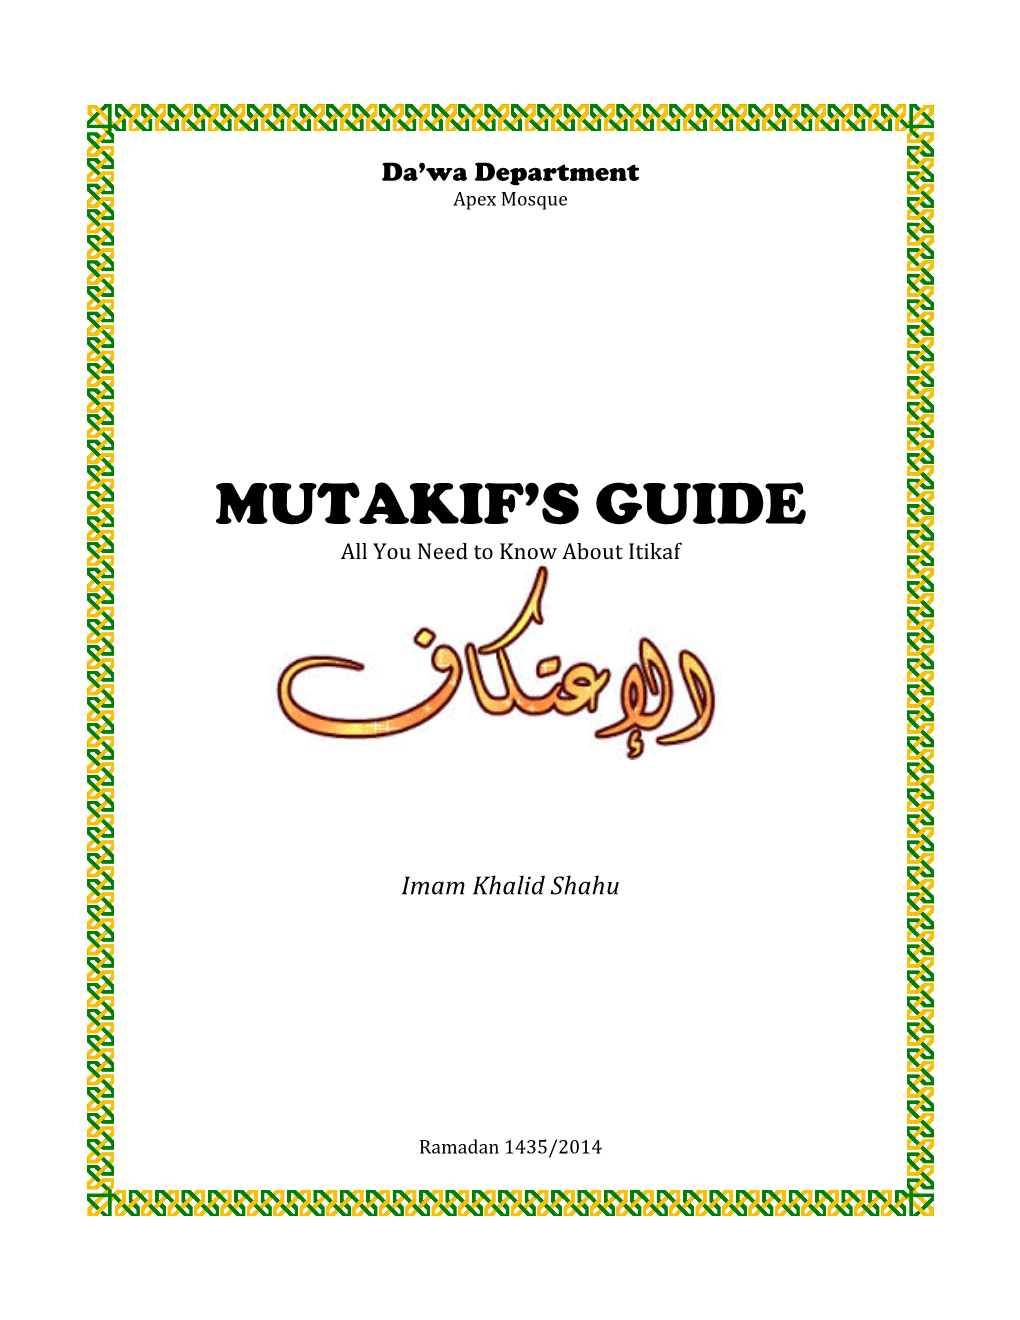 Mutakif's Guide